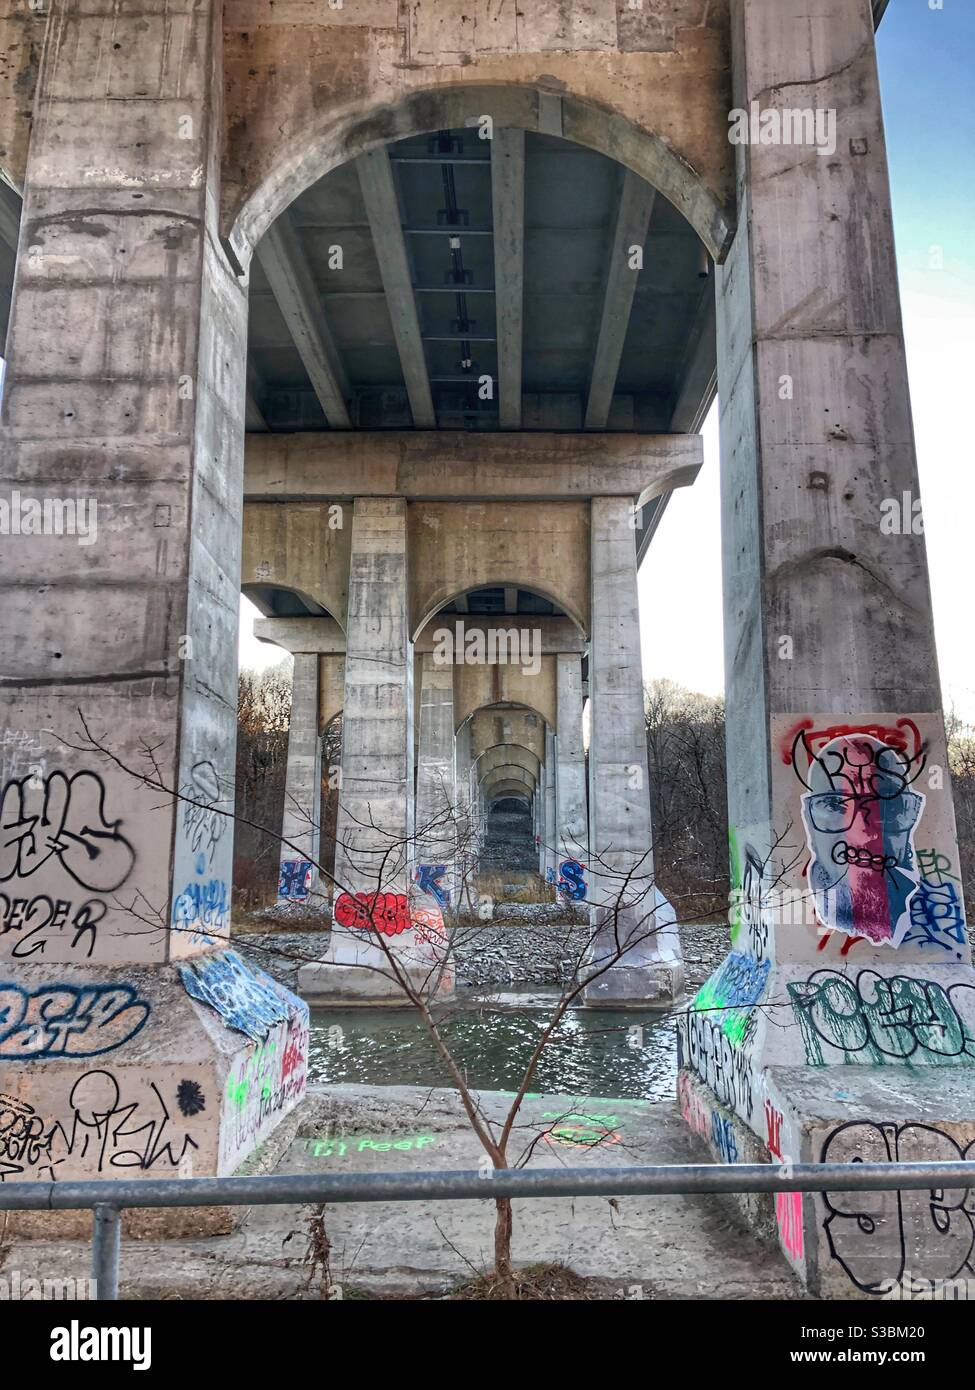 Graffiti on the pillars of a bridge underpass. Stock Photo